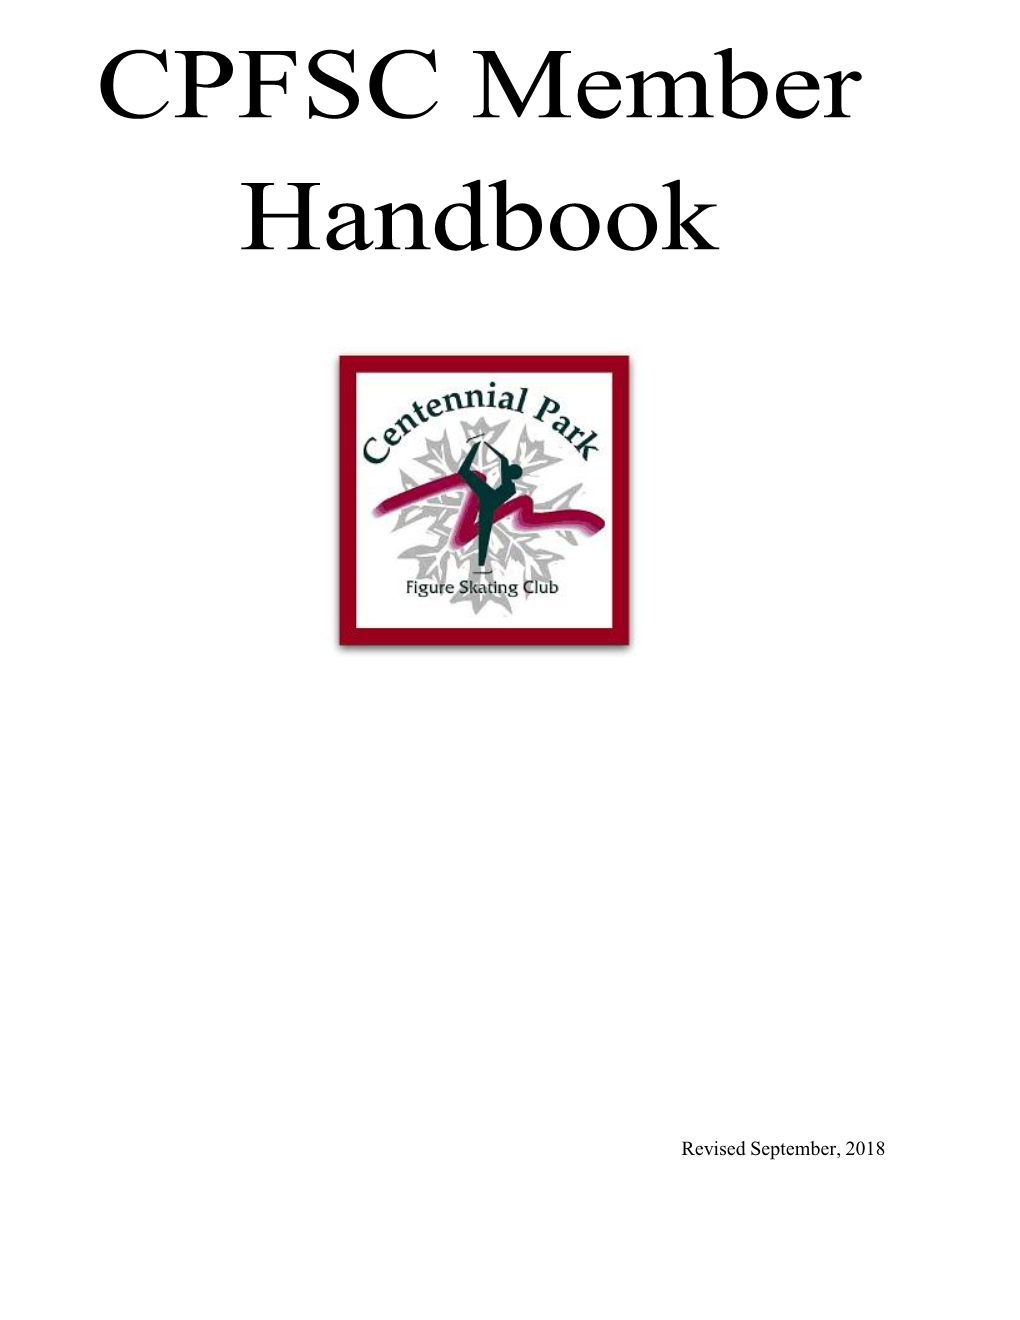 CPFSC Member Handbook